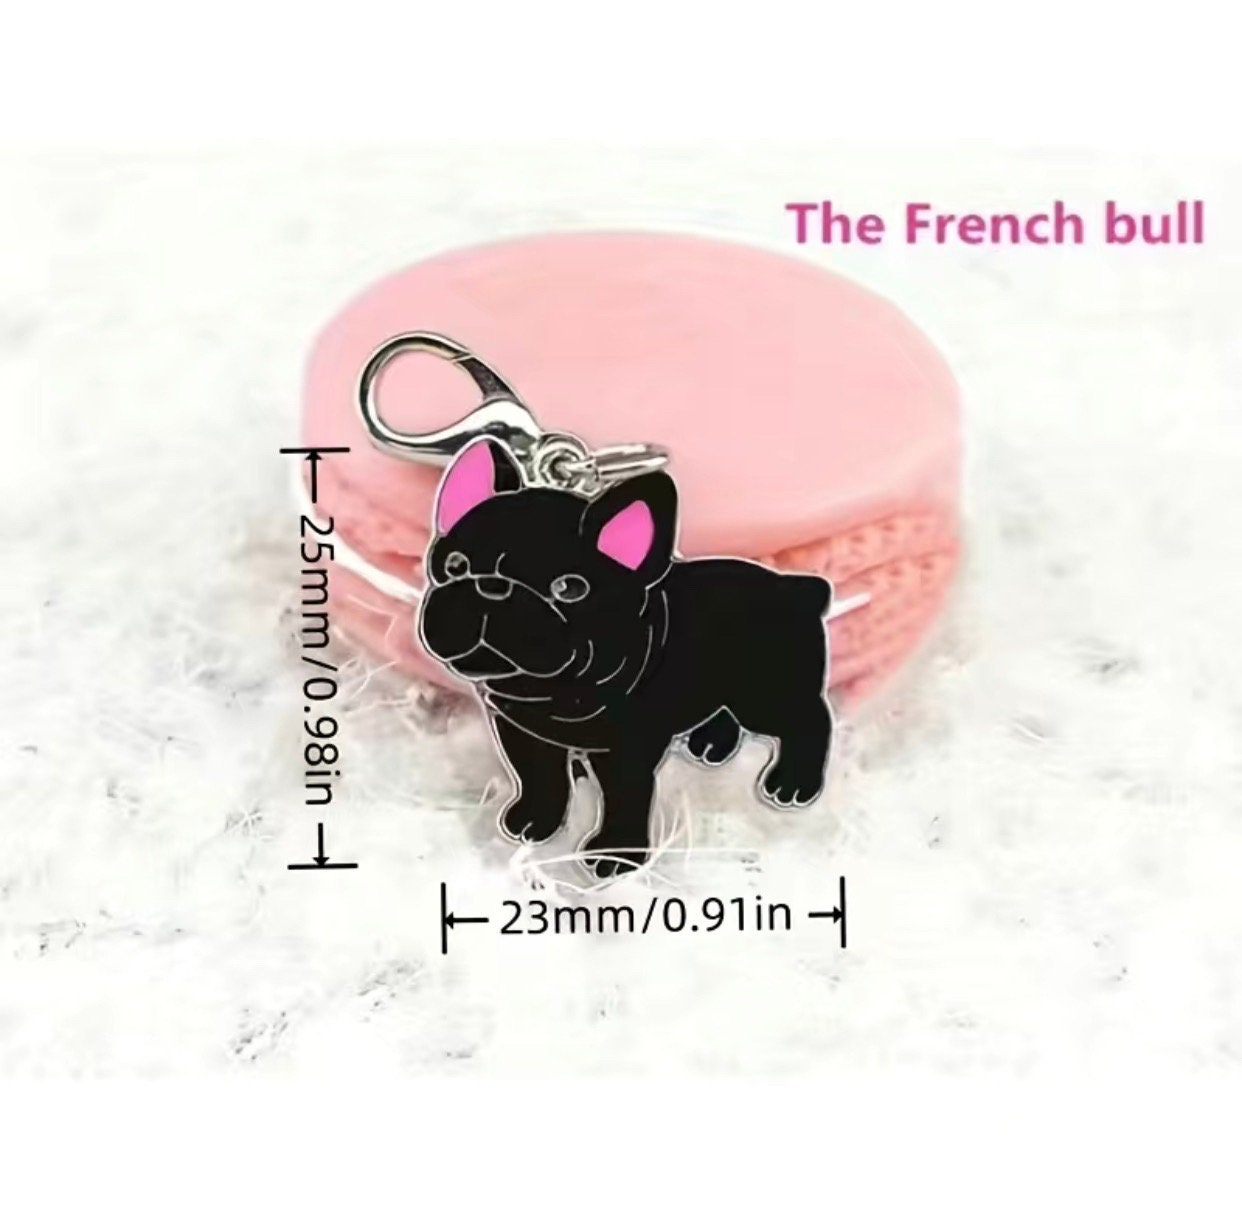 This French Bulldog bag charm is too cute